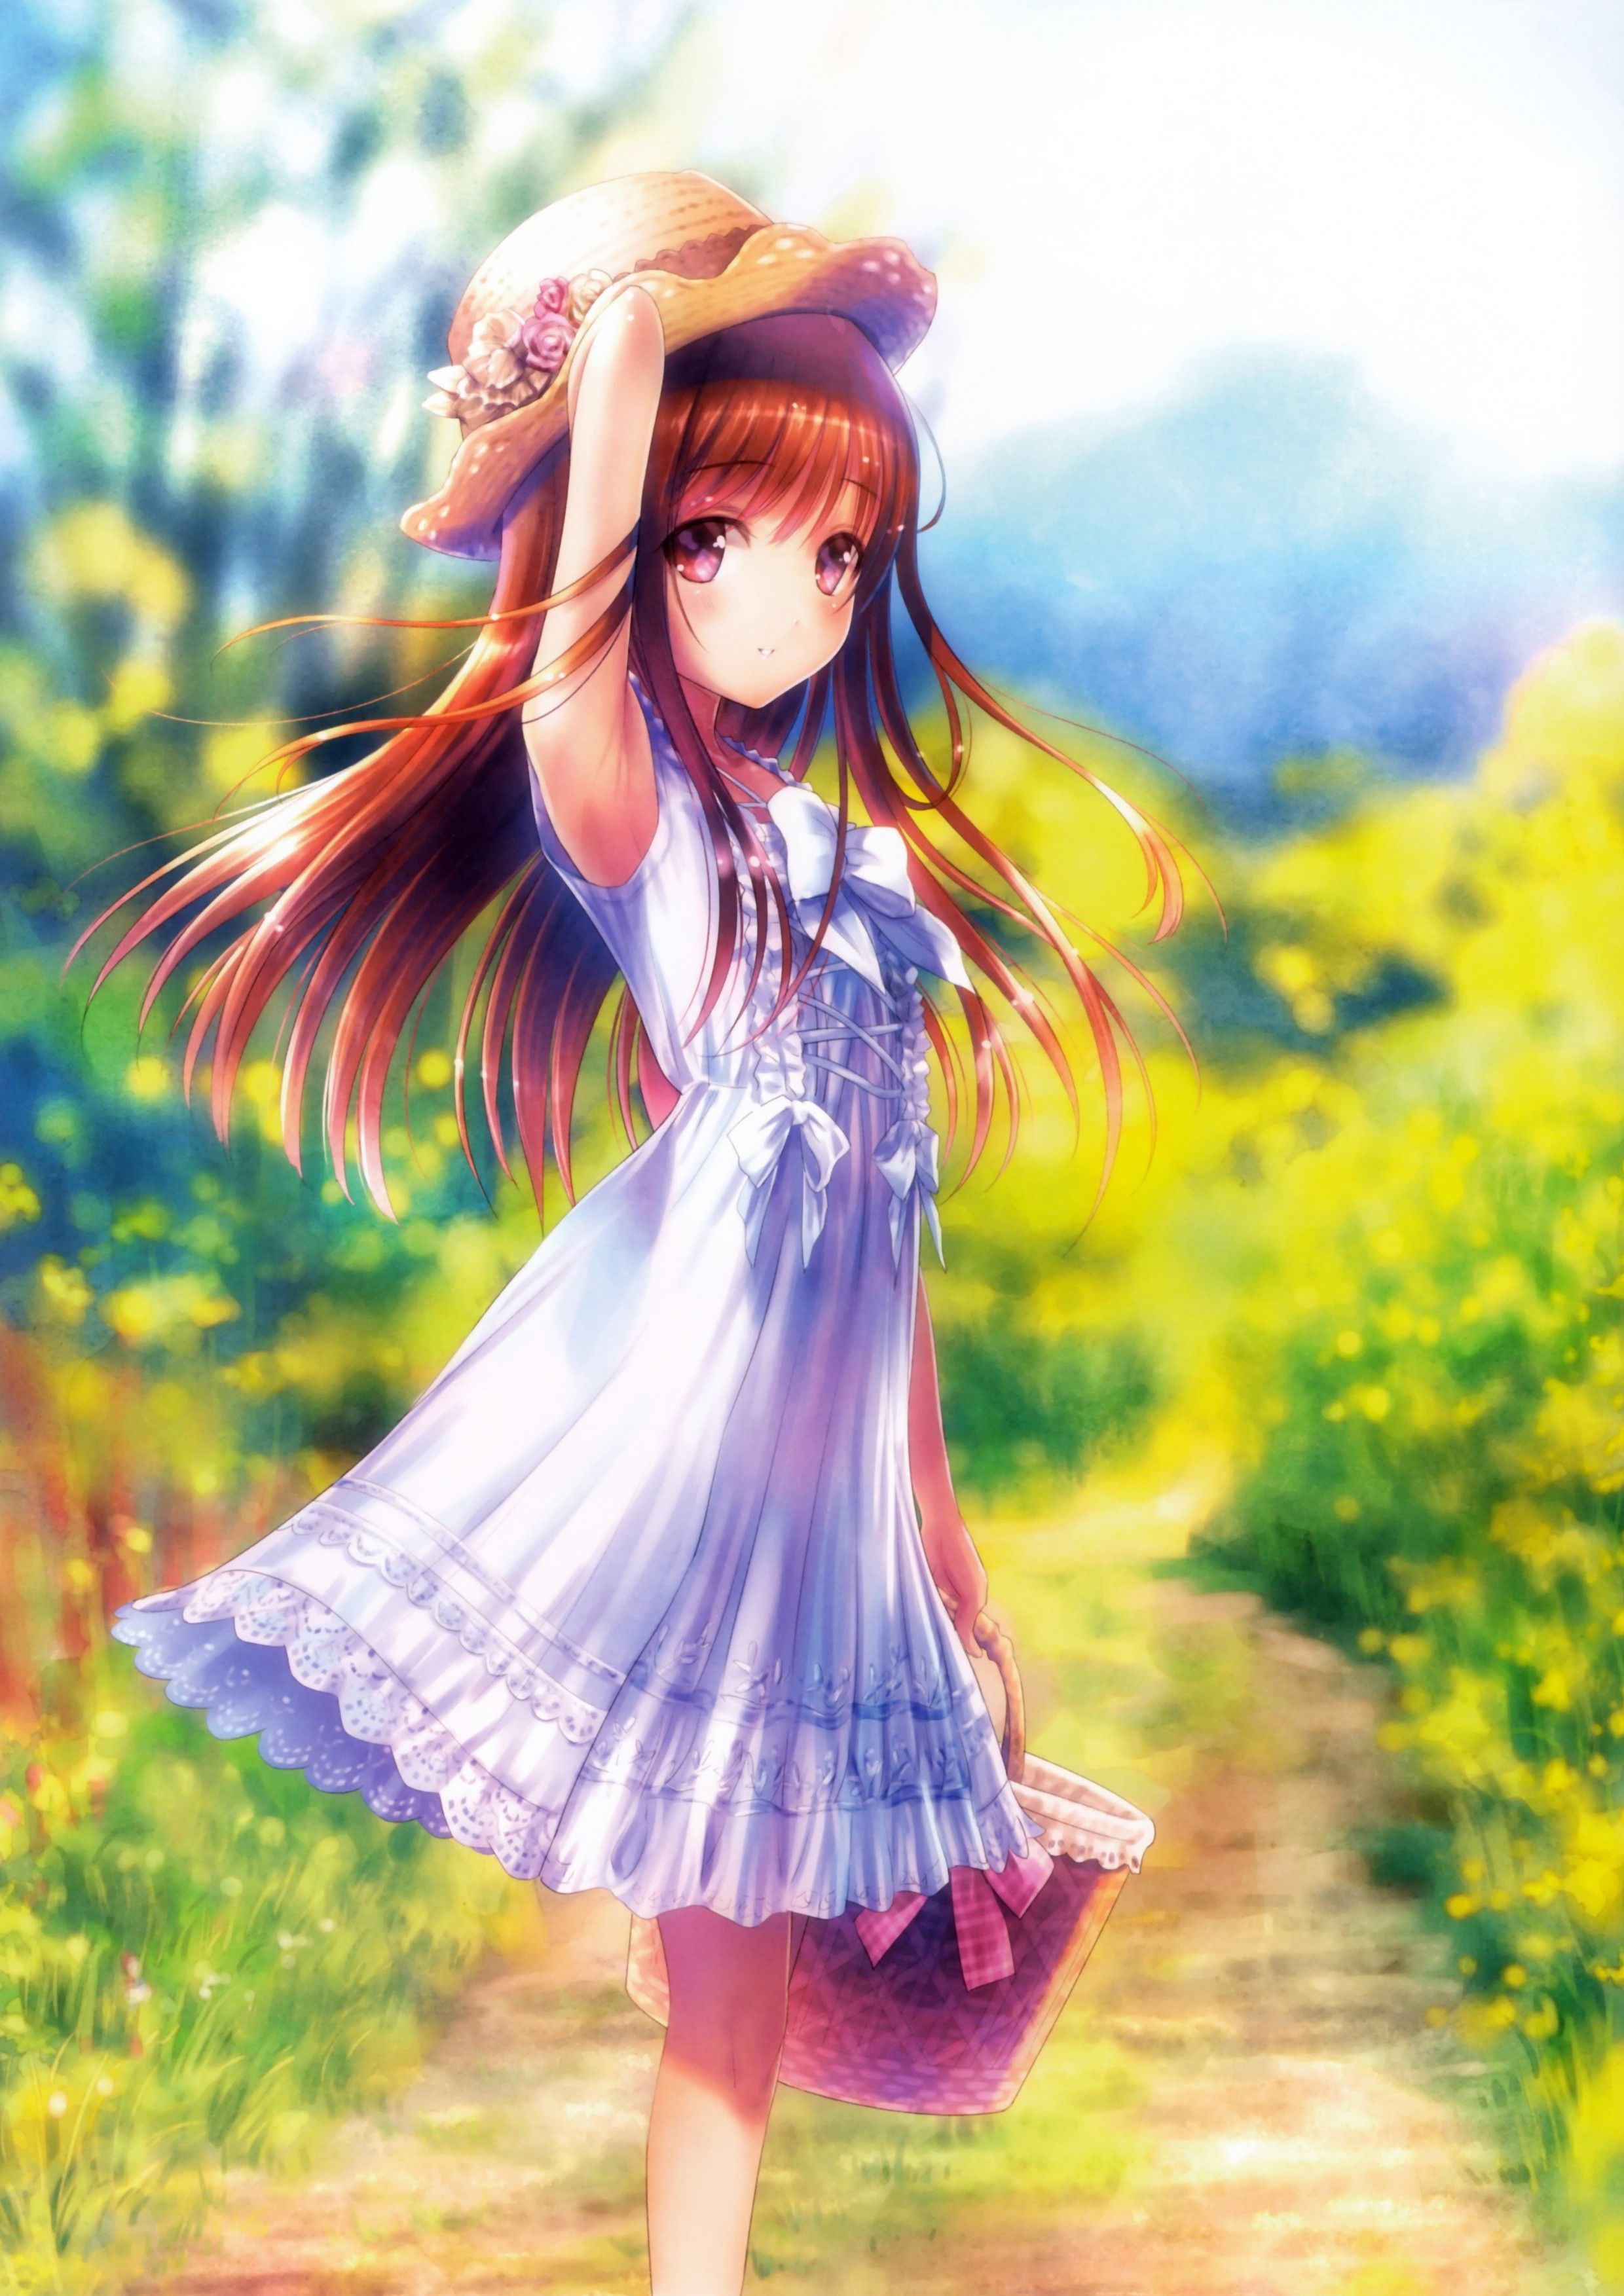 Download 2480x3507 Anime Girl, Yellow Flowers, White Dress, Summer, Strawhat, Basket Wallpaper